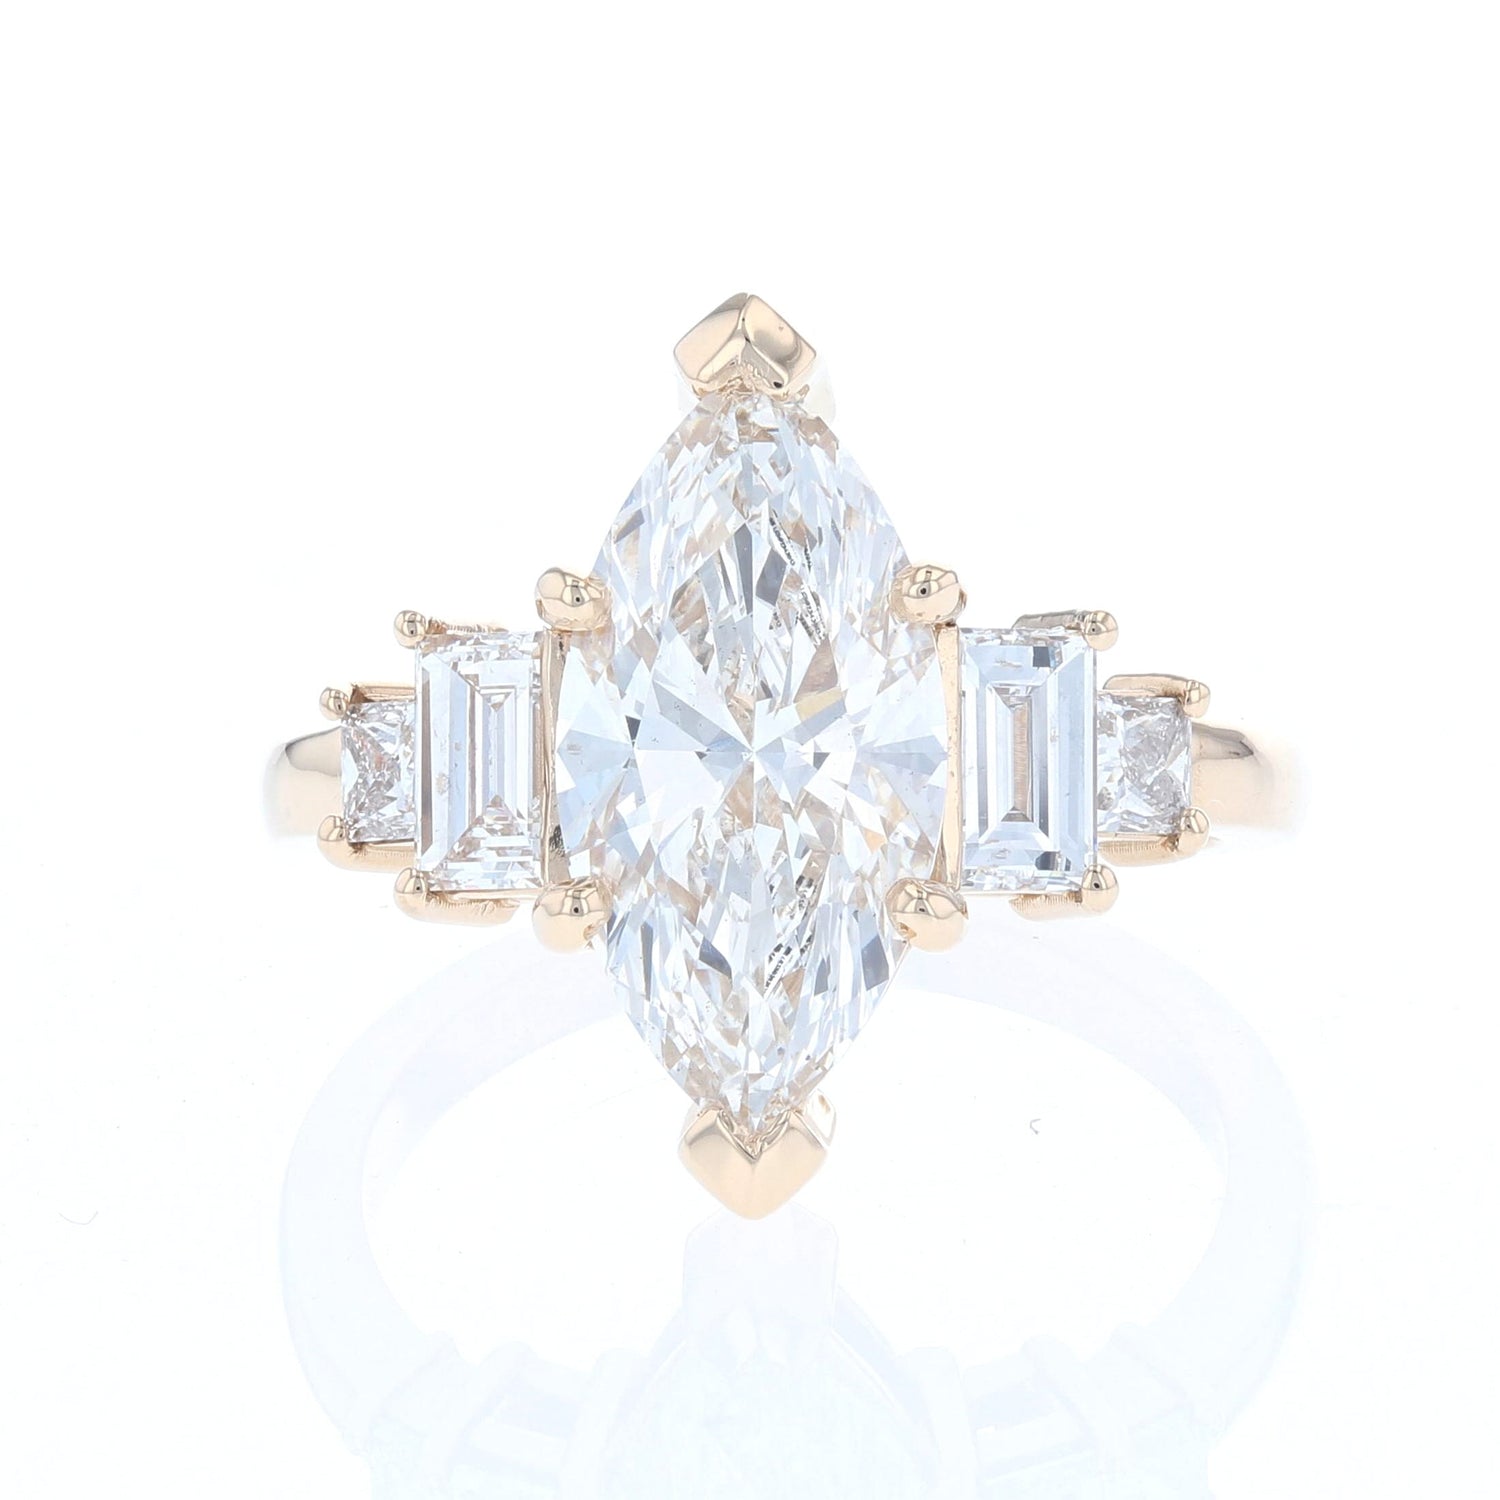 Classic marquise-cut diamond engagement ring